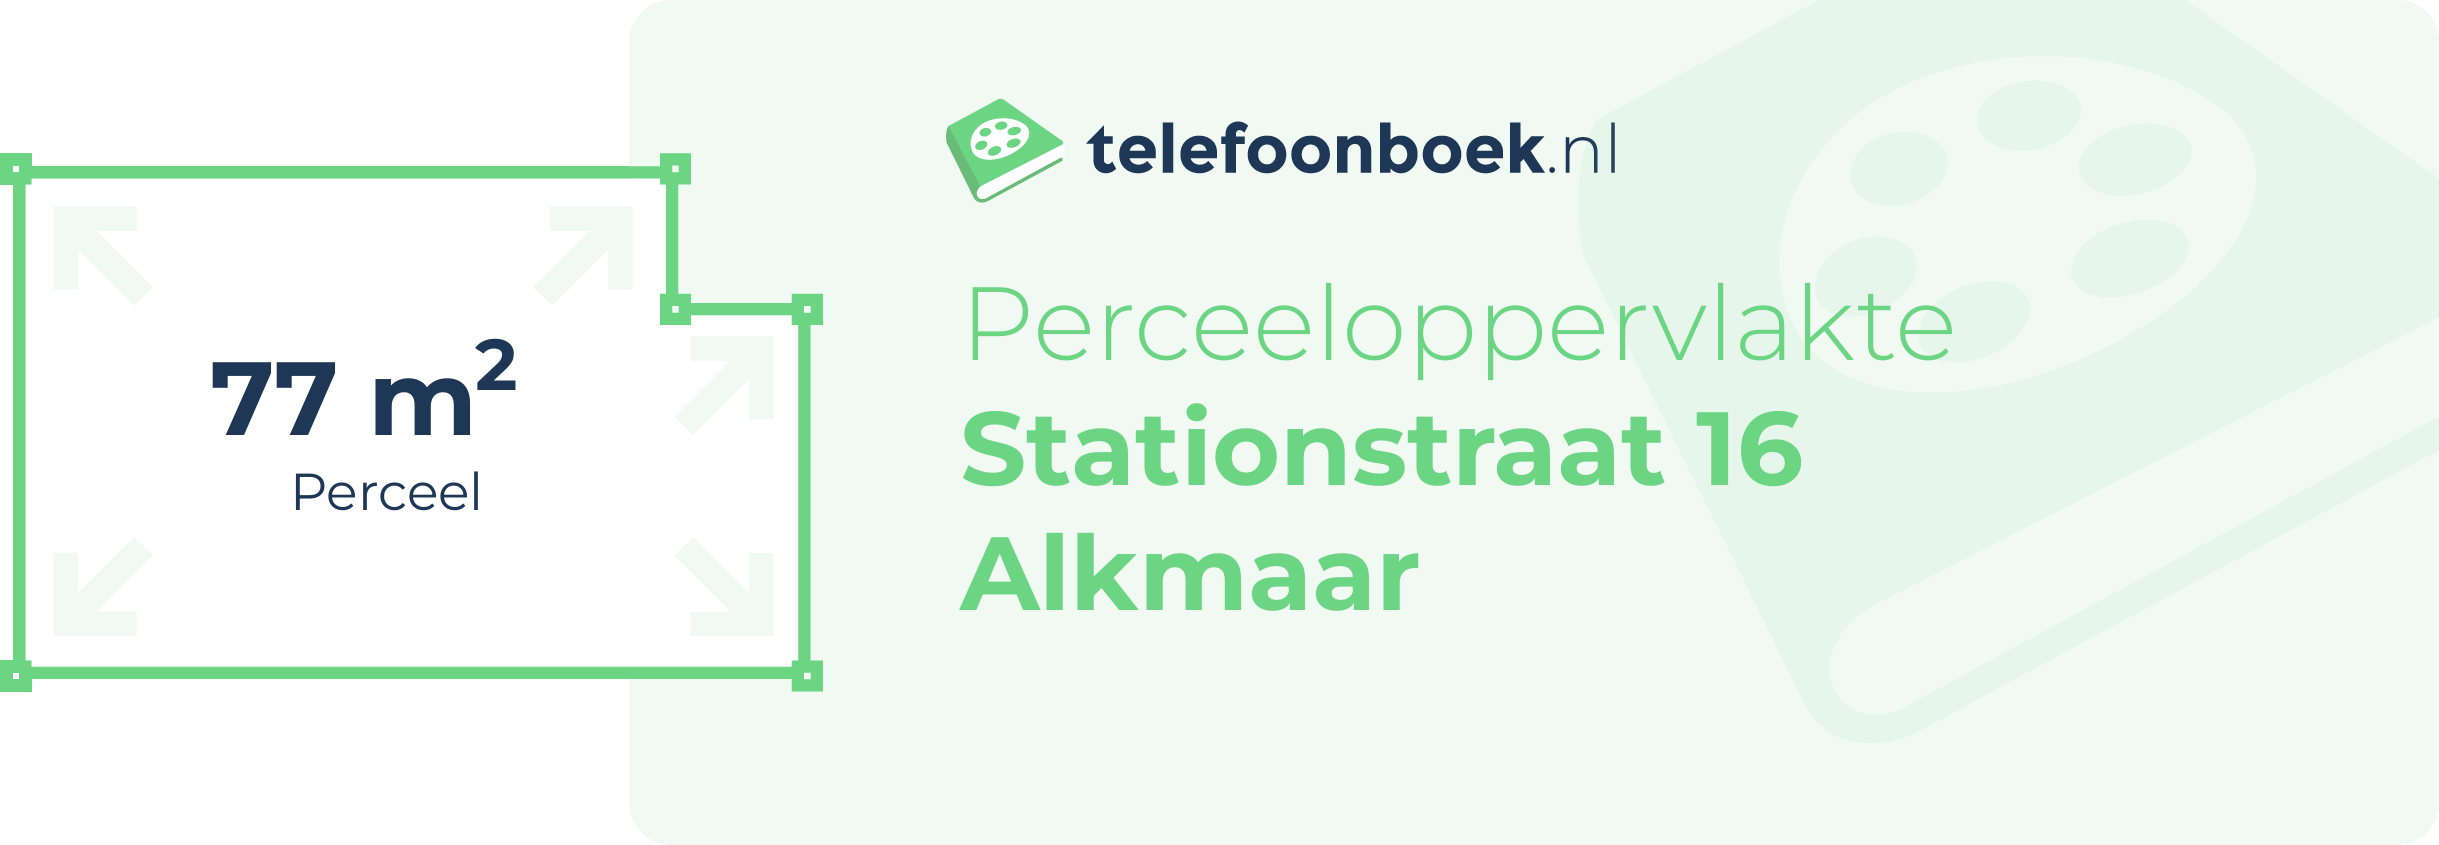 Perceeloppervlakte Stationstraat 16 Alkmaar